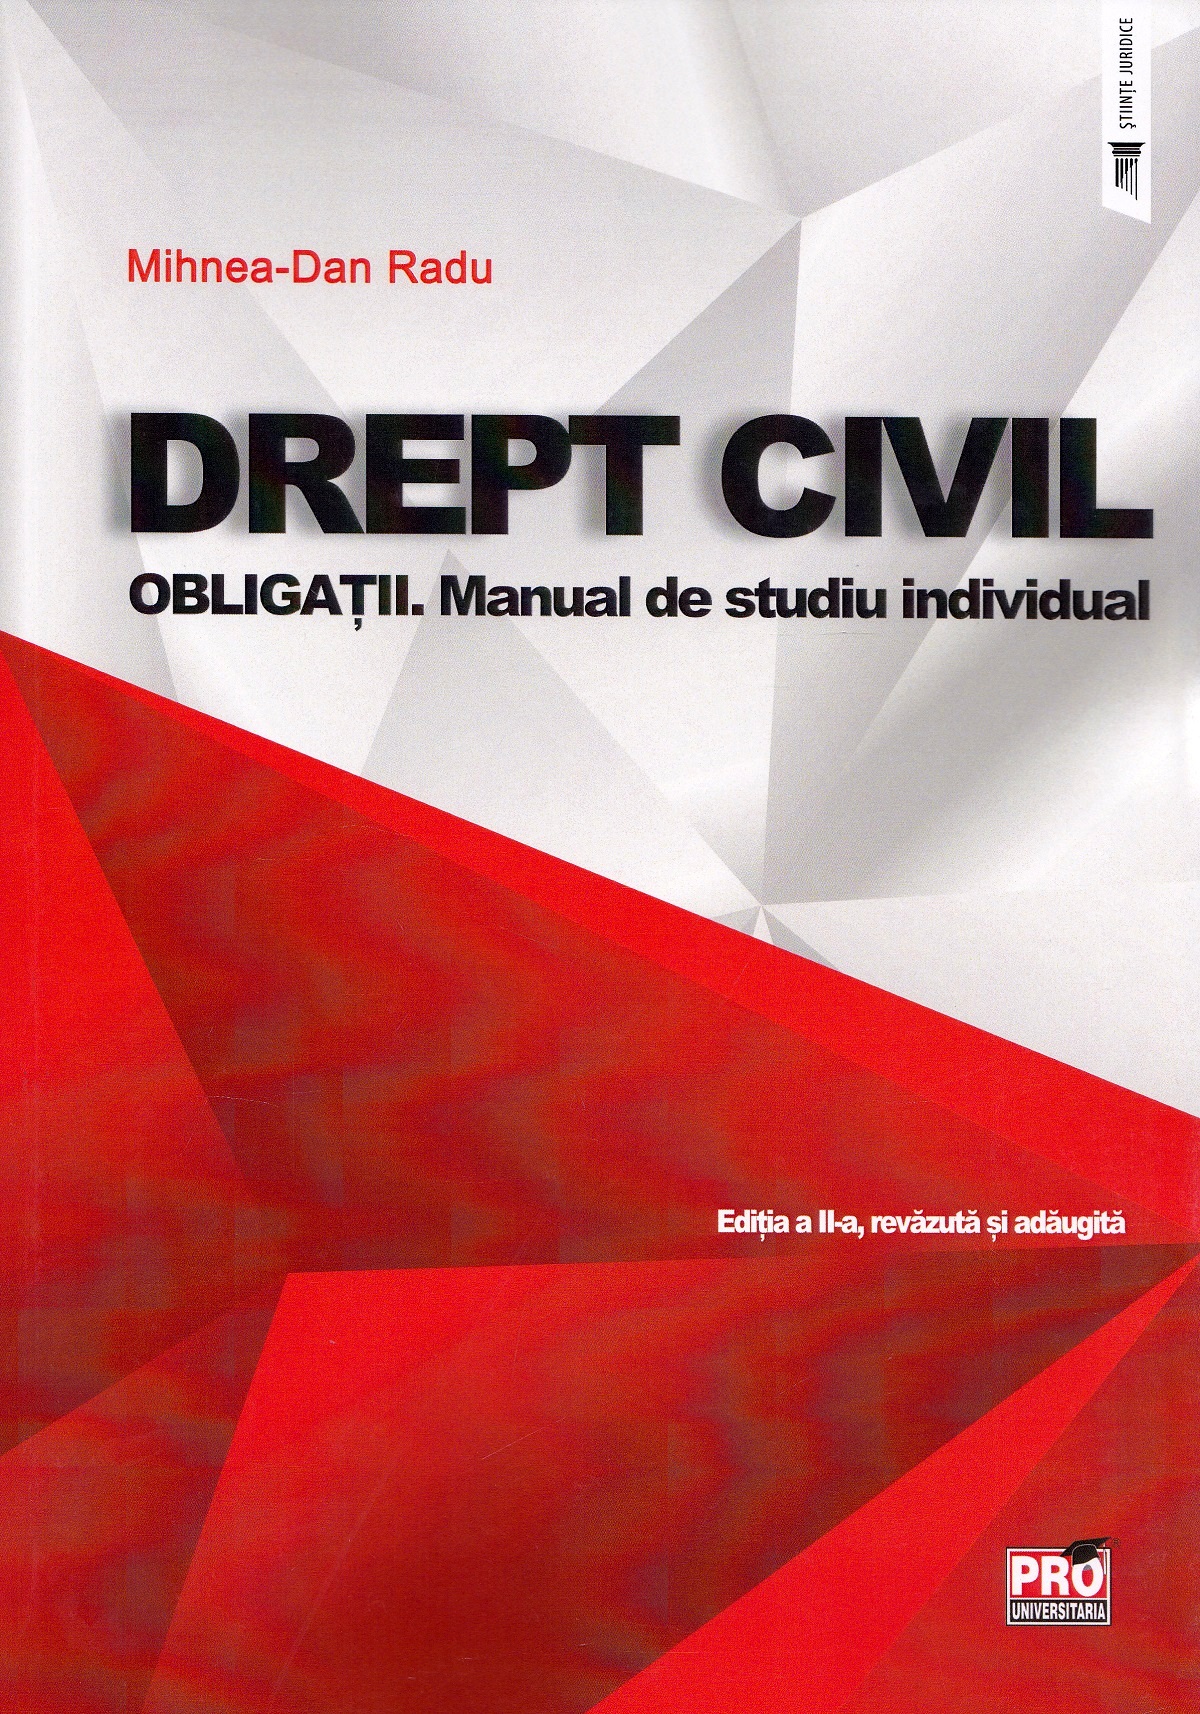 Drept civil. Obligatii. Manual de studiu individual - Mihnea-Dan Radu